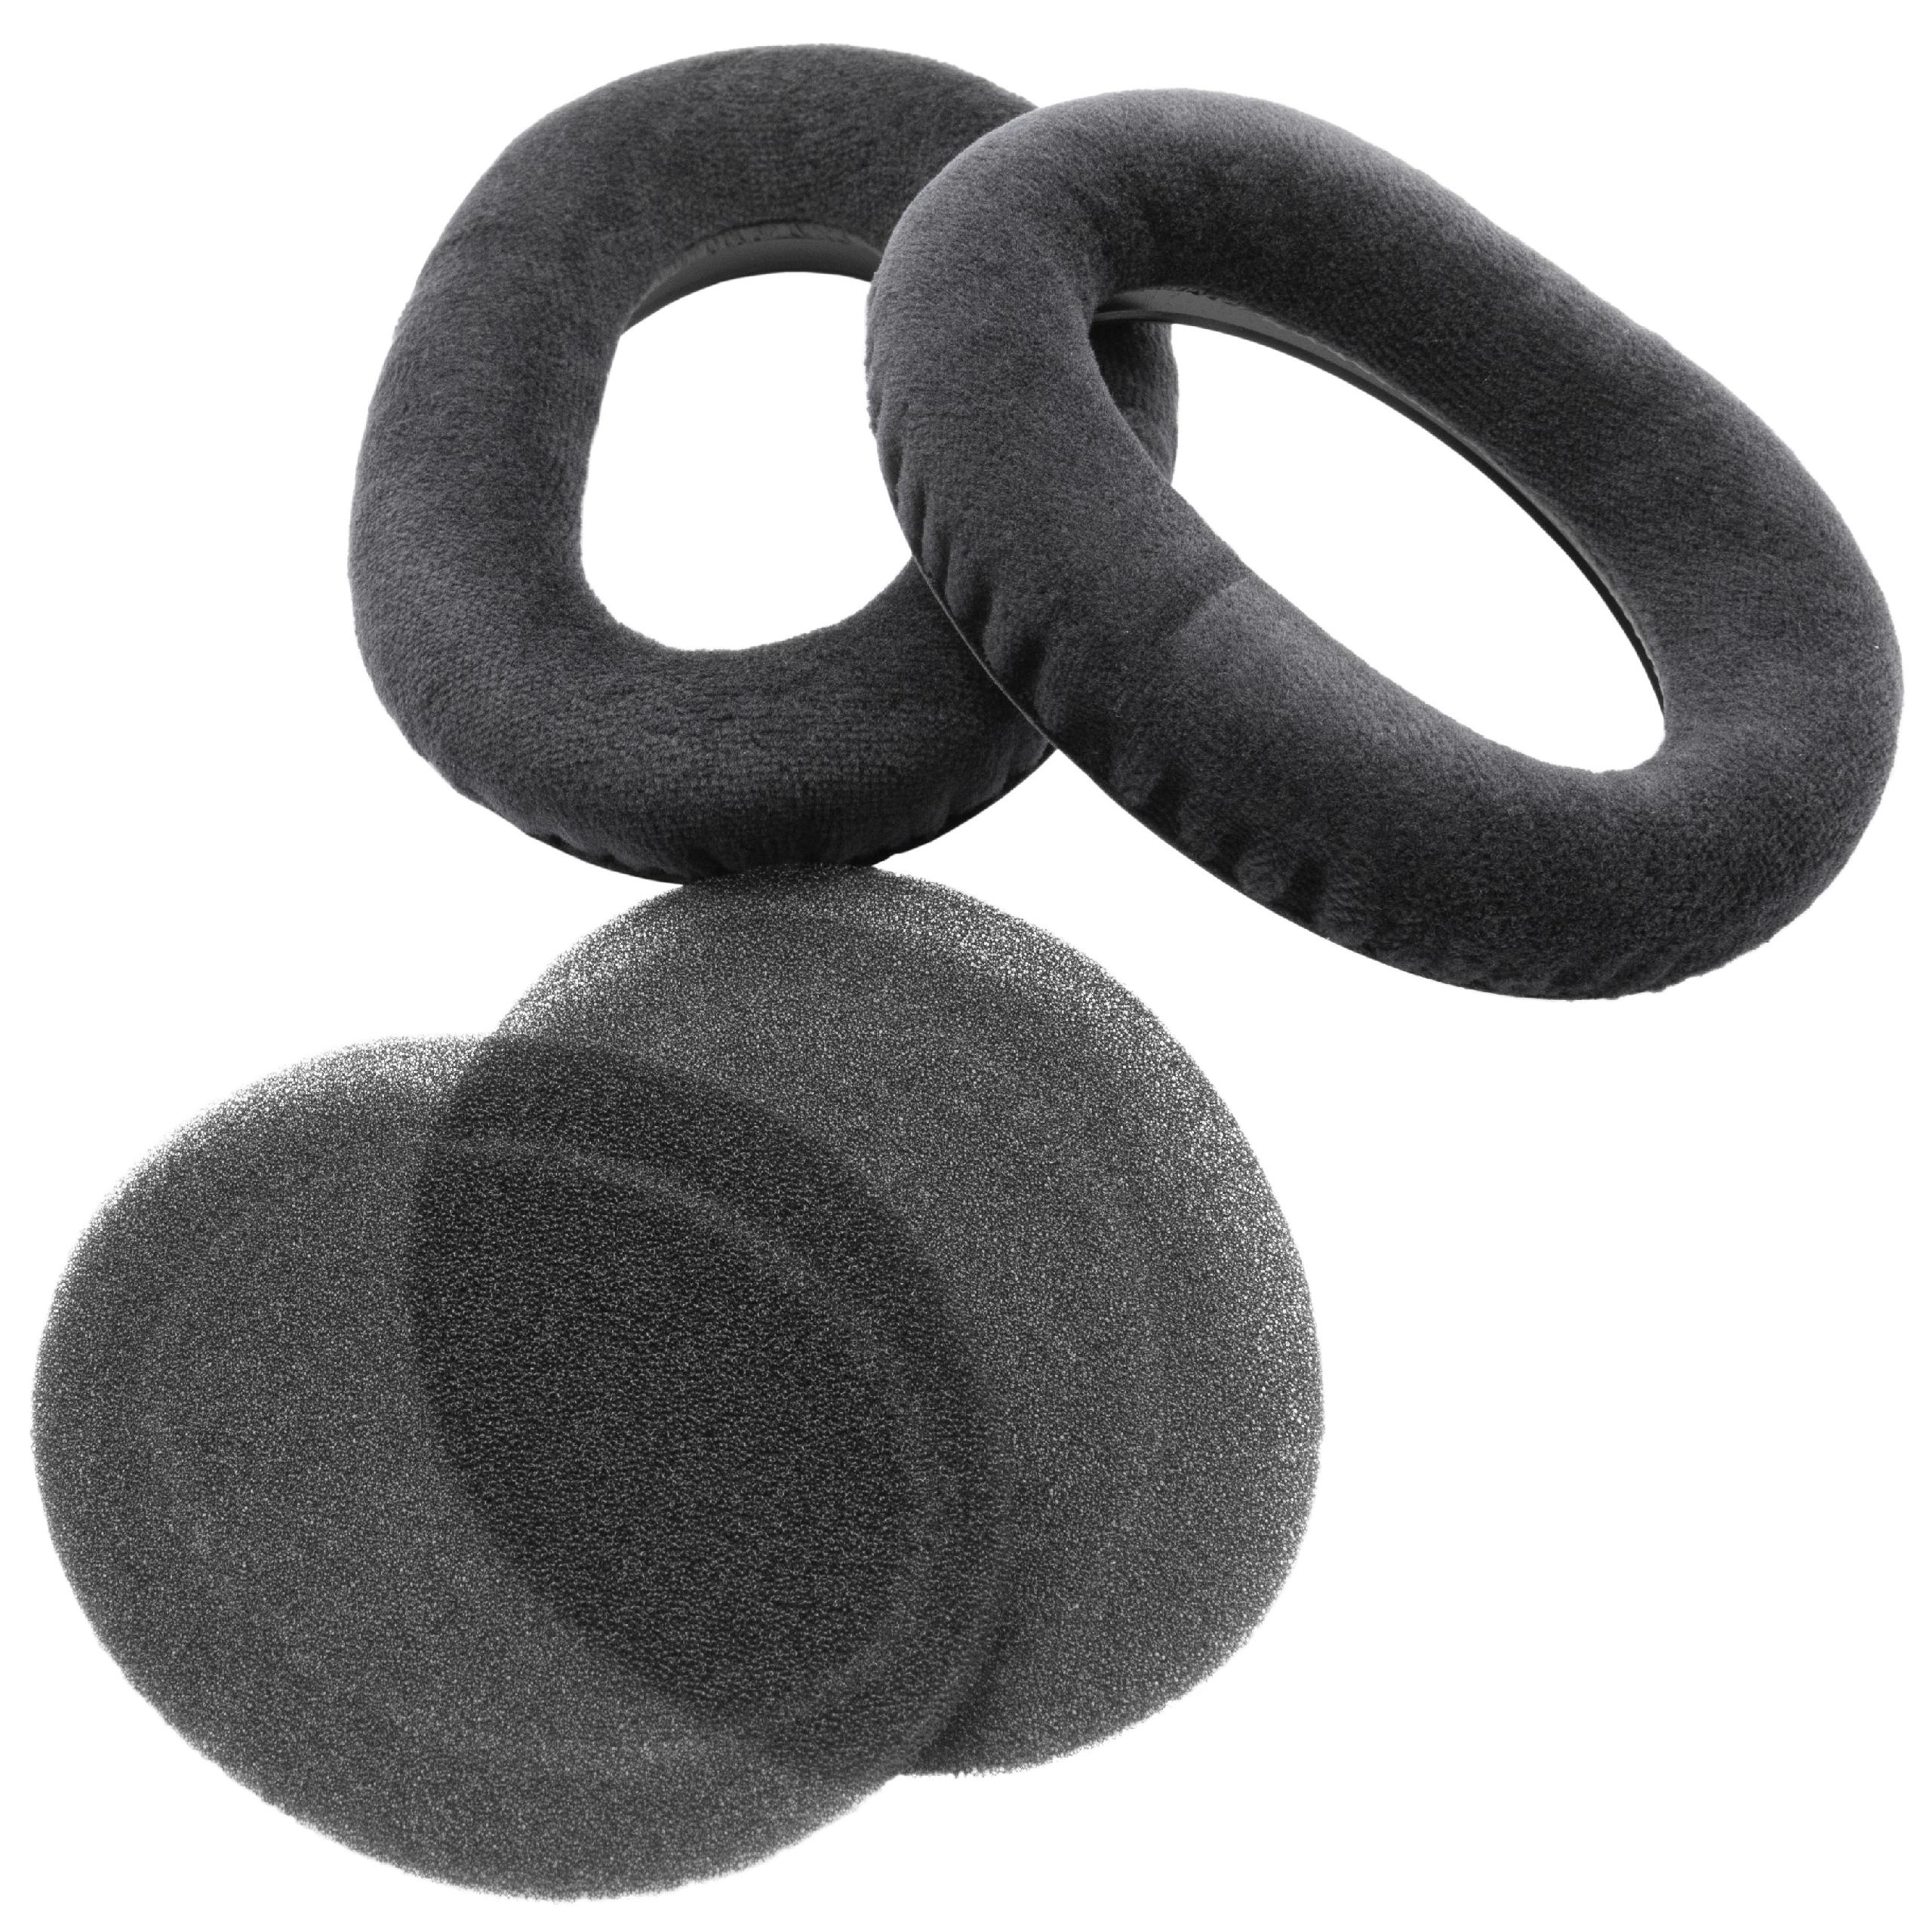 Ear Pads suitable for Sennheiser HD545 Headphones etc. - foam, 19 mm thick